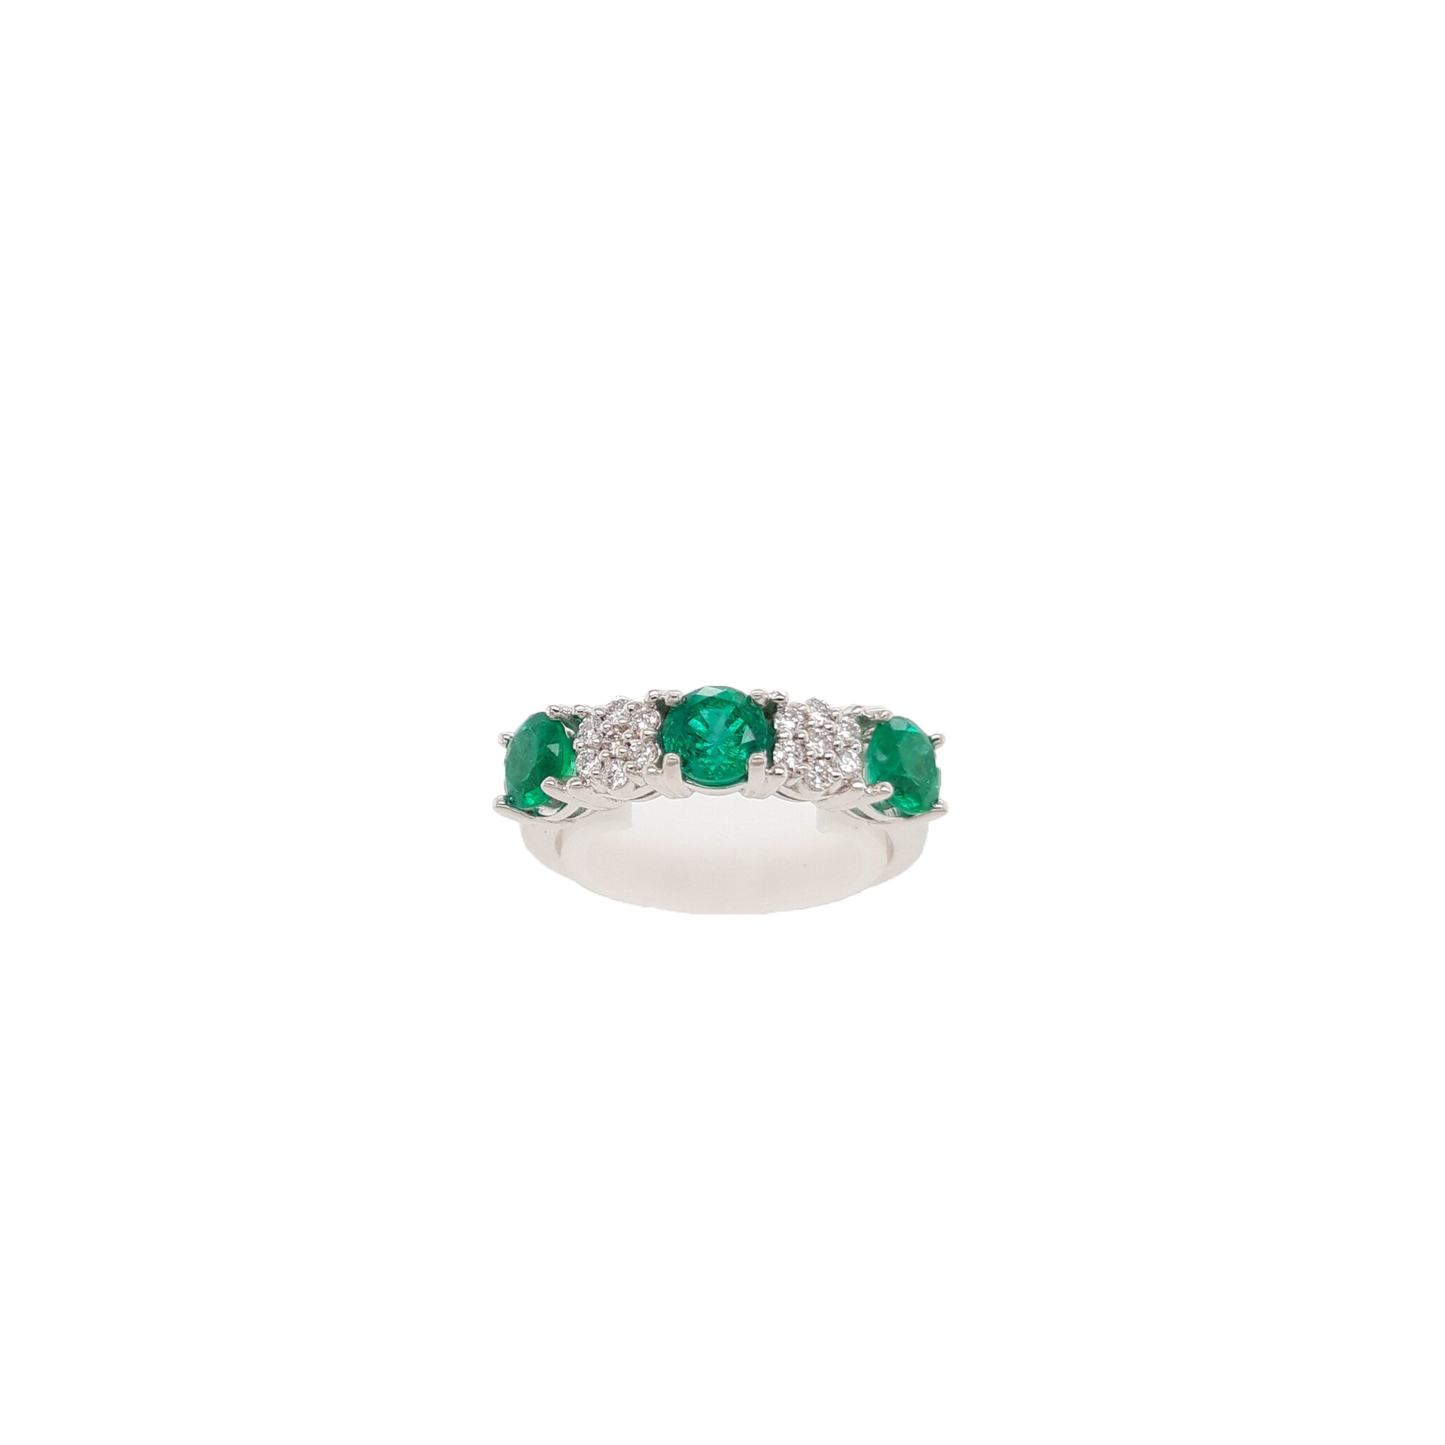 Ladies Diamond Ring With Emeralds 1.31 Carats